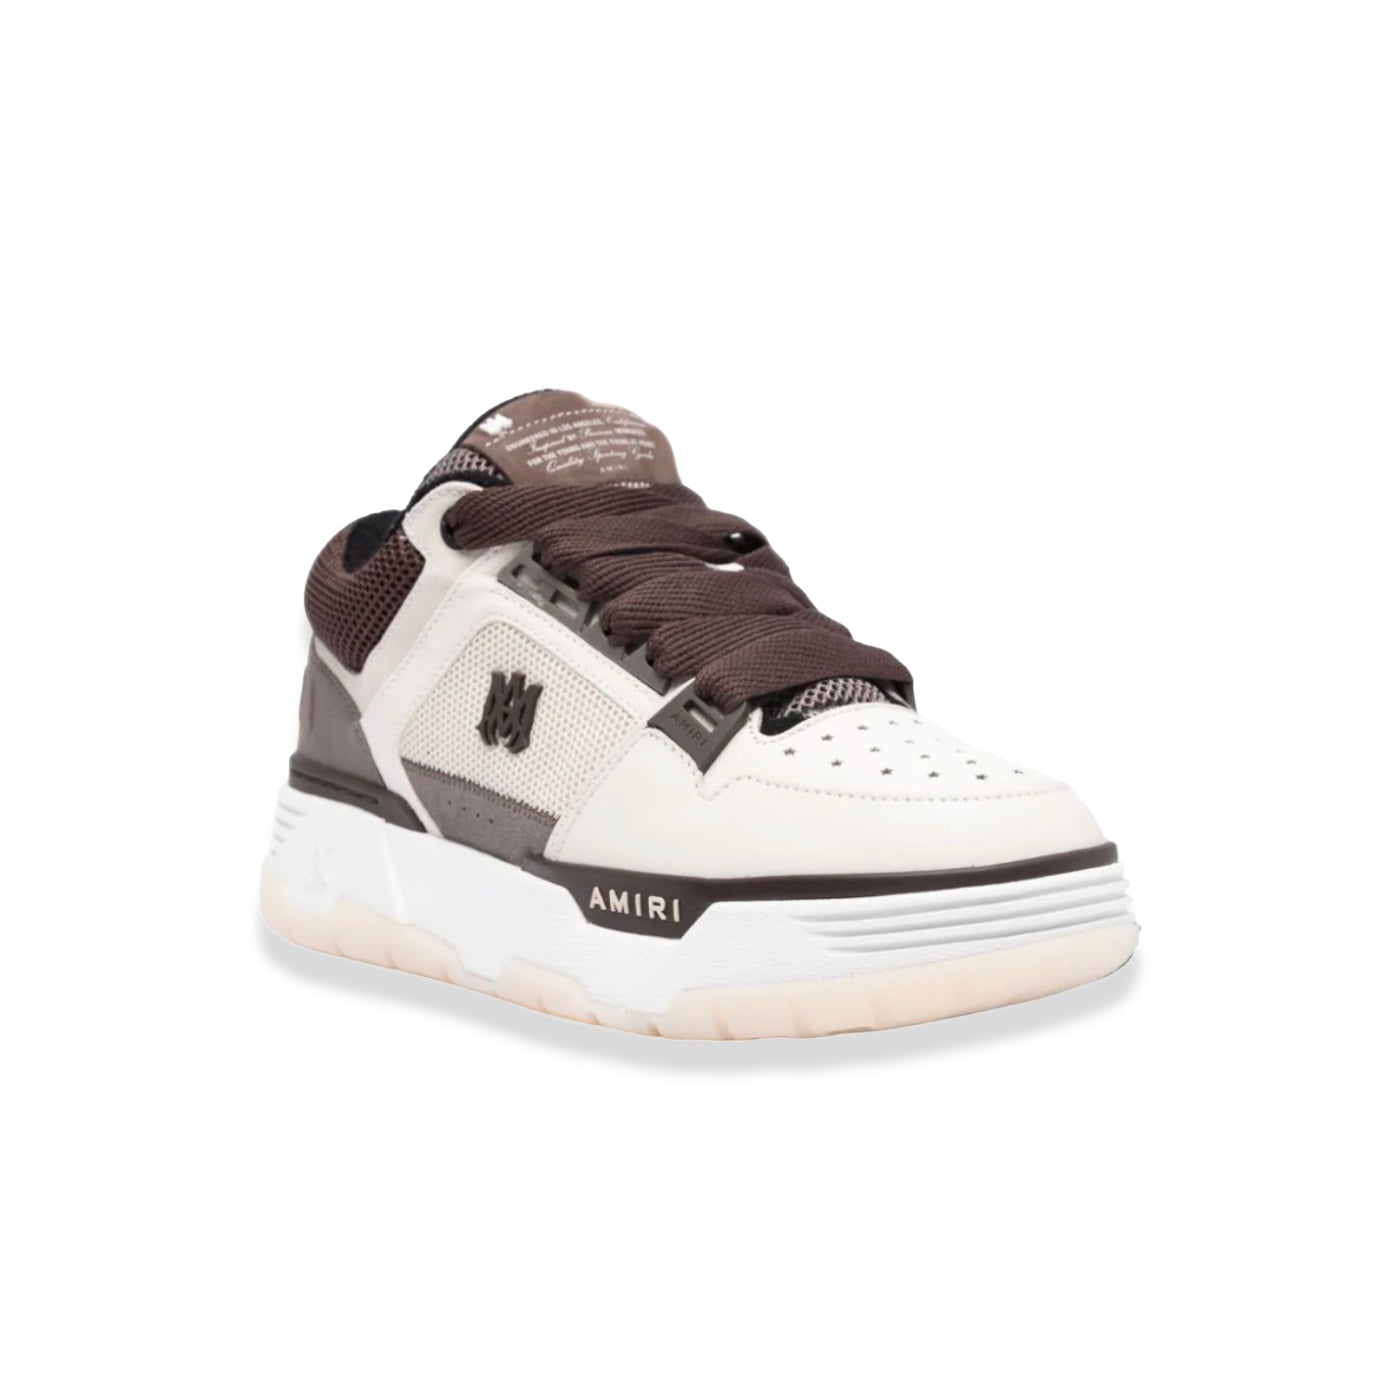 Amiri - MA1 Sneakers Brown